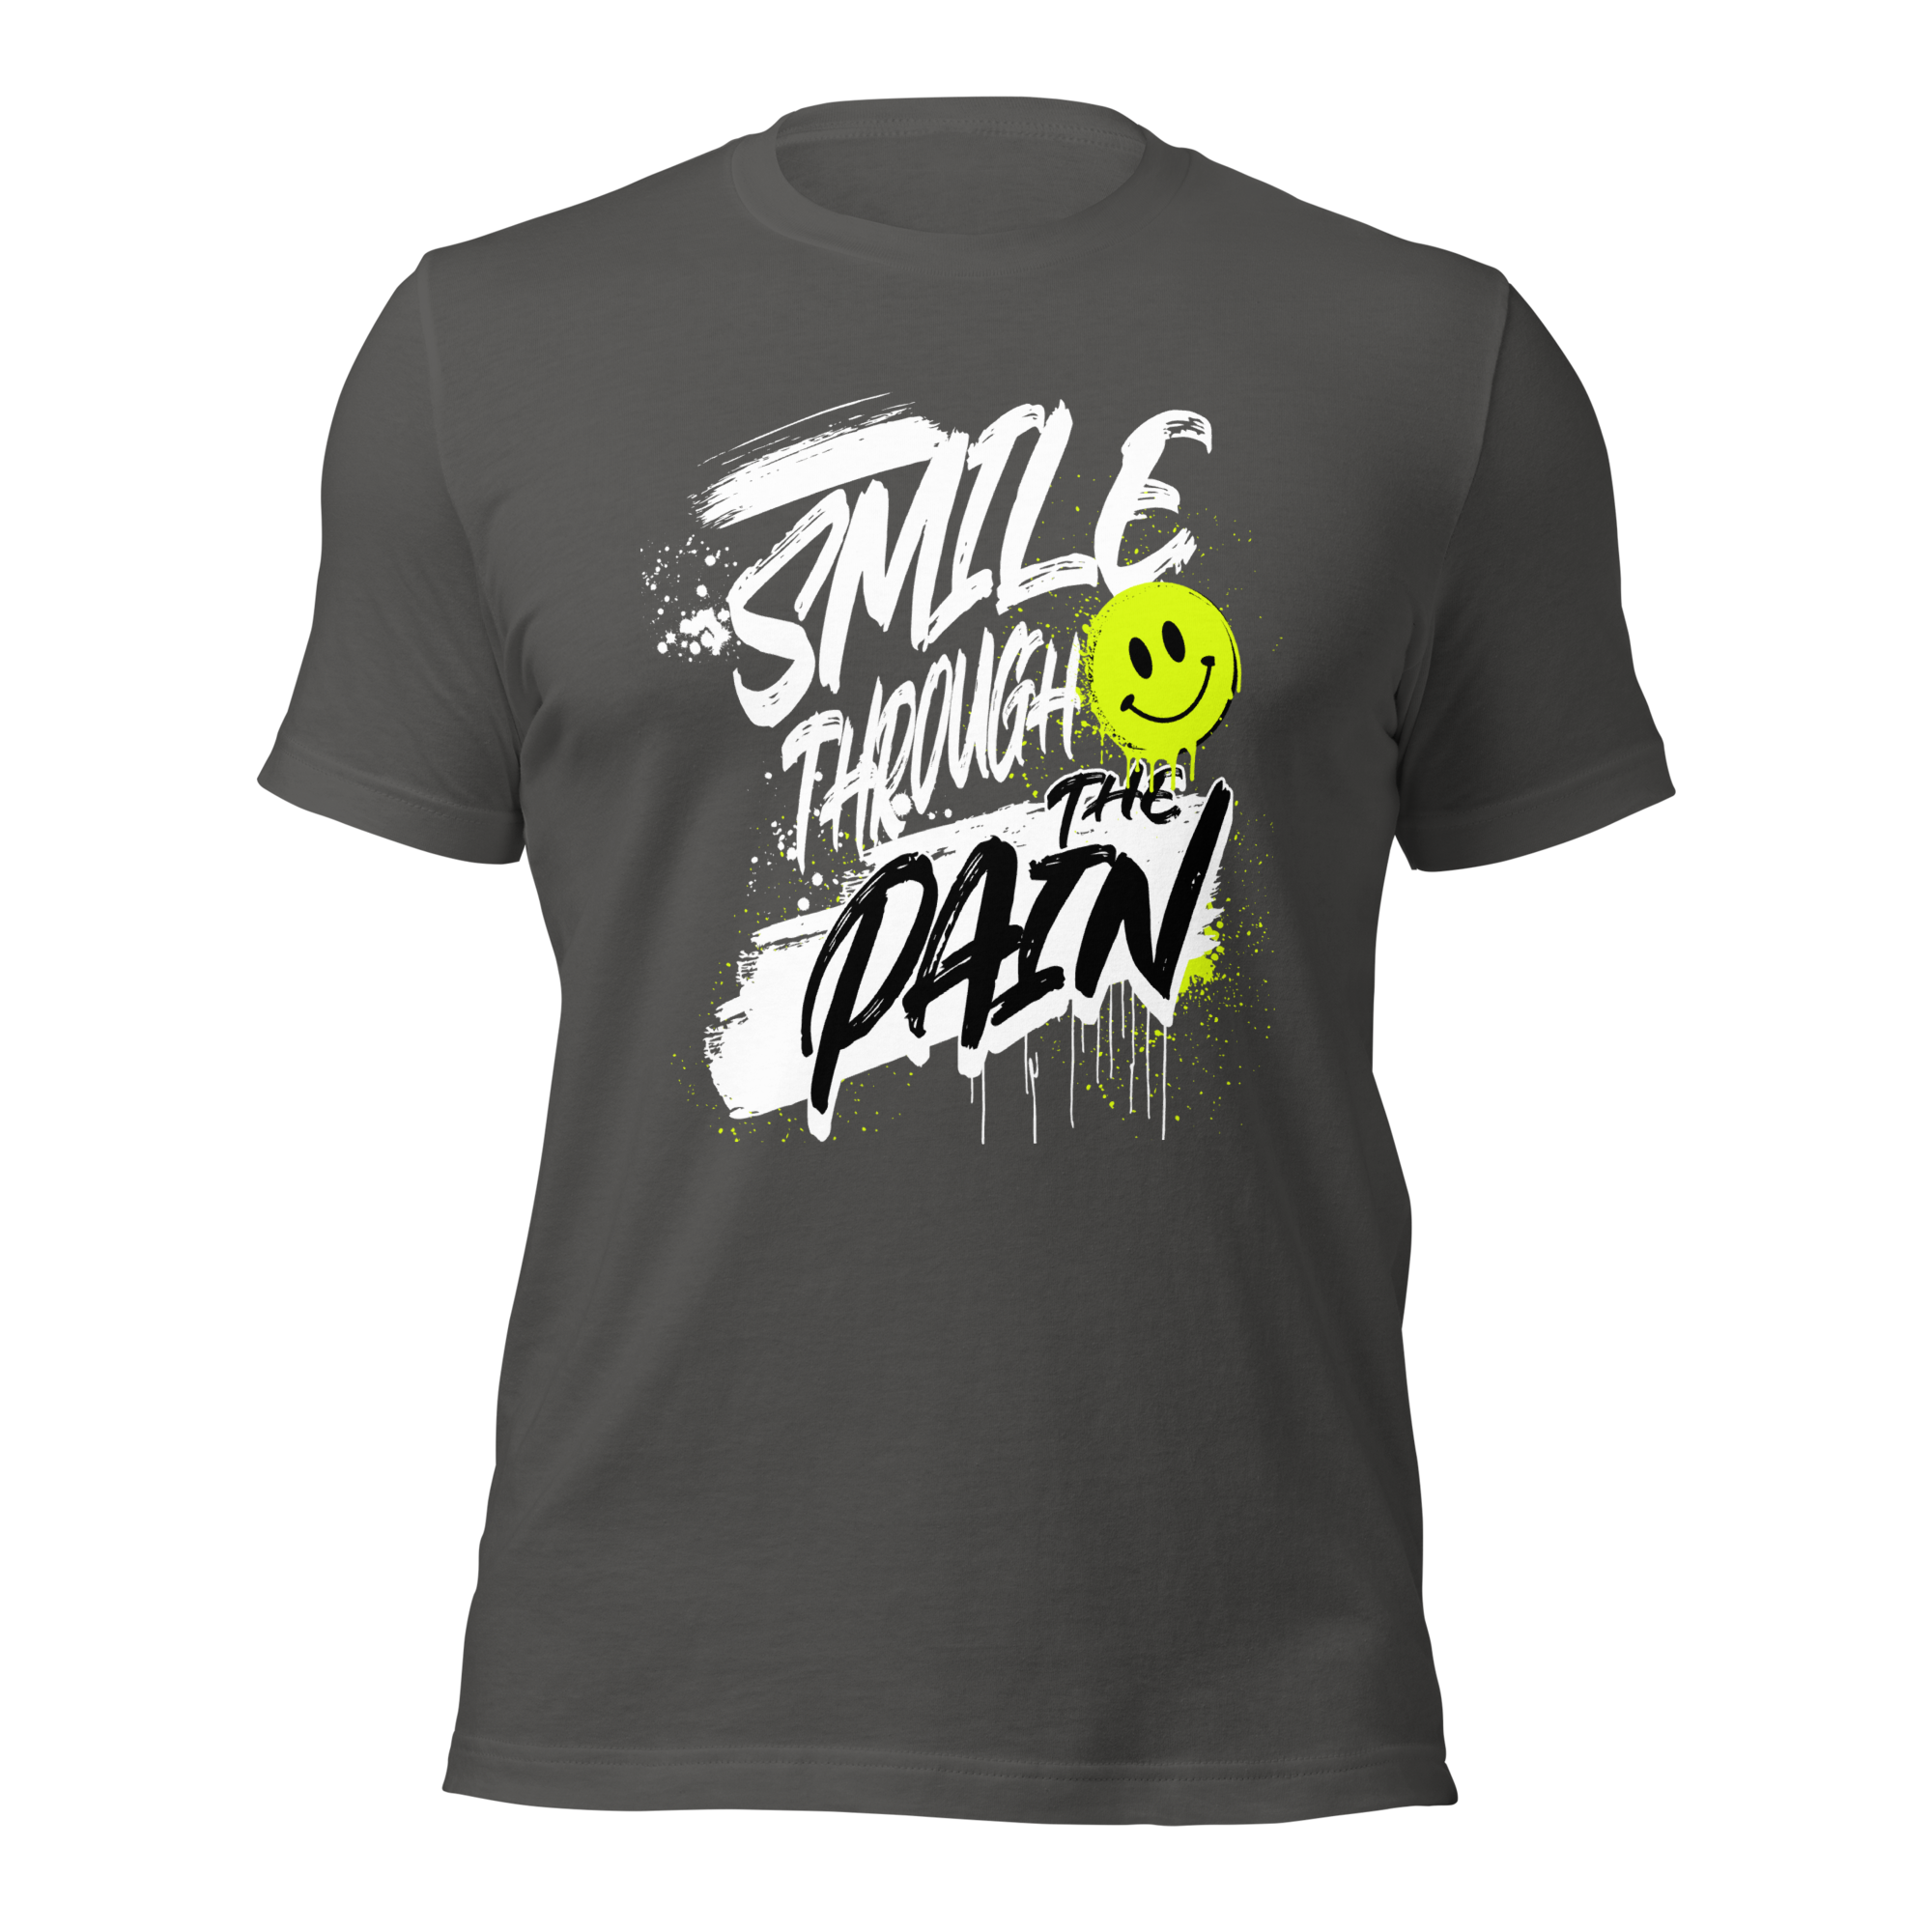 Smile Through the Pain T-Shirt